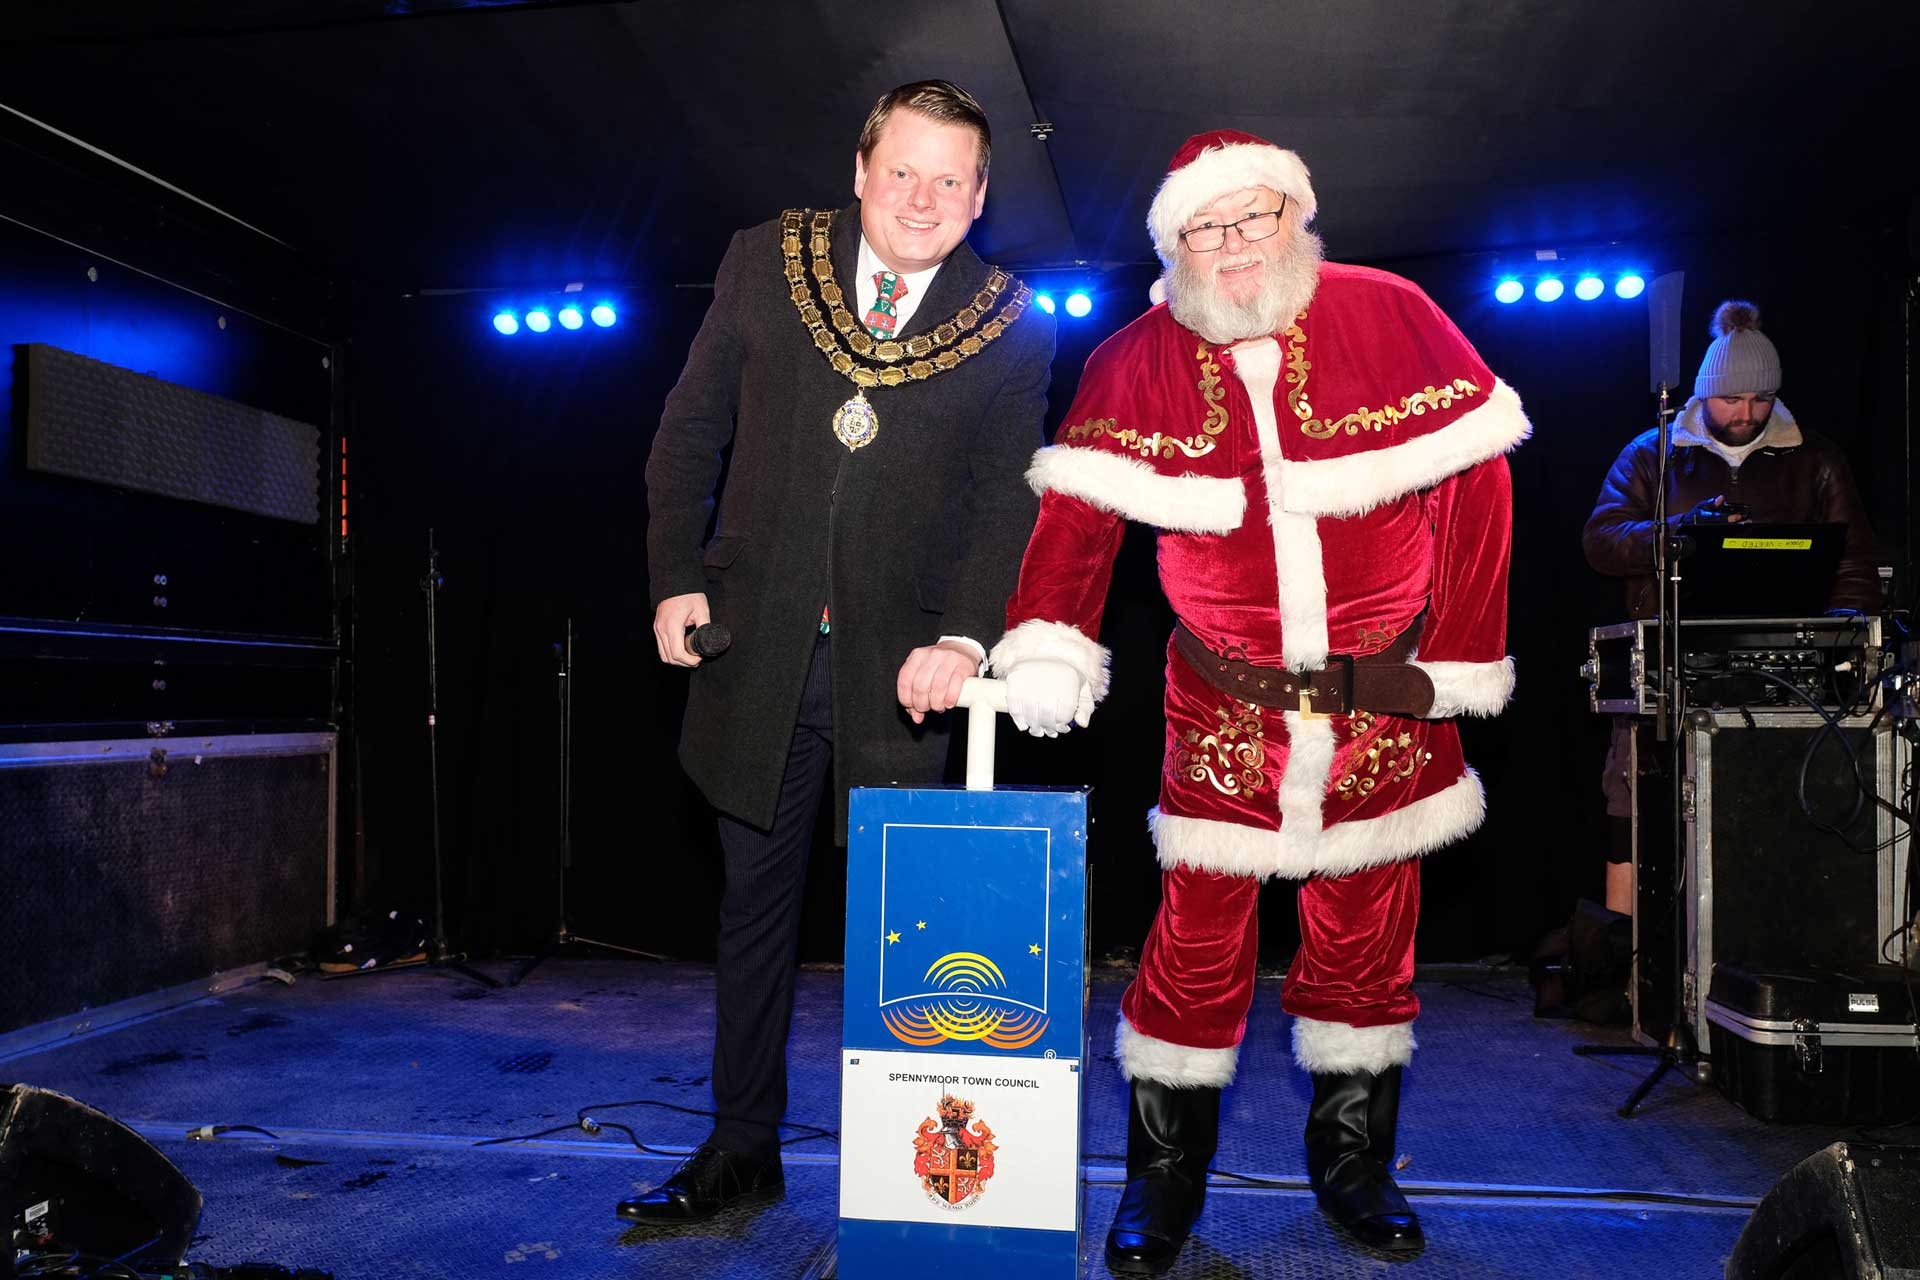 The Mayor, Cllr Ian Geldard, and Santa